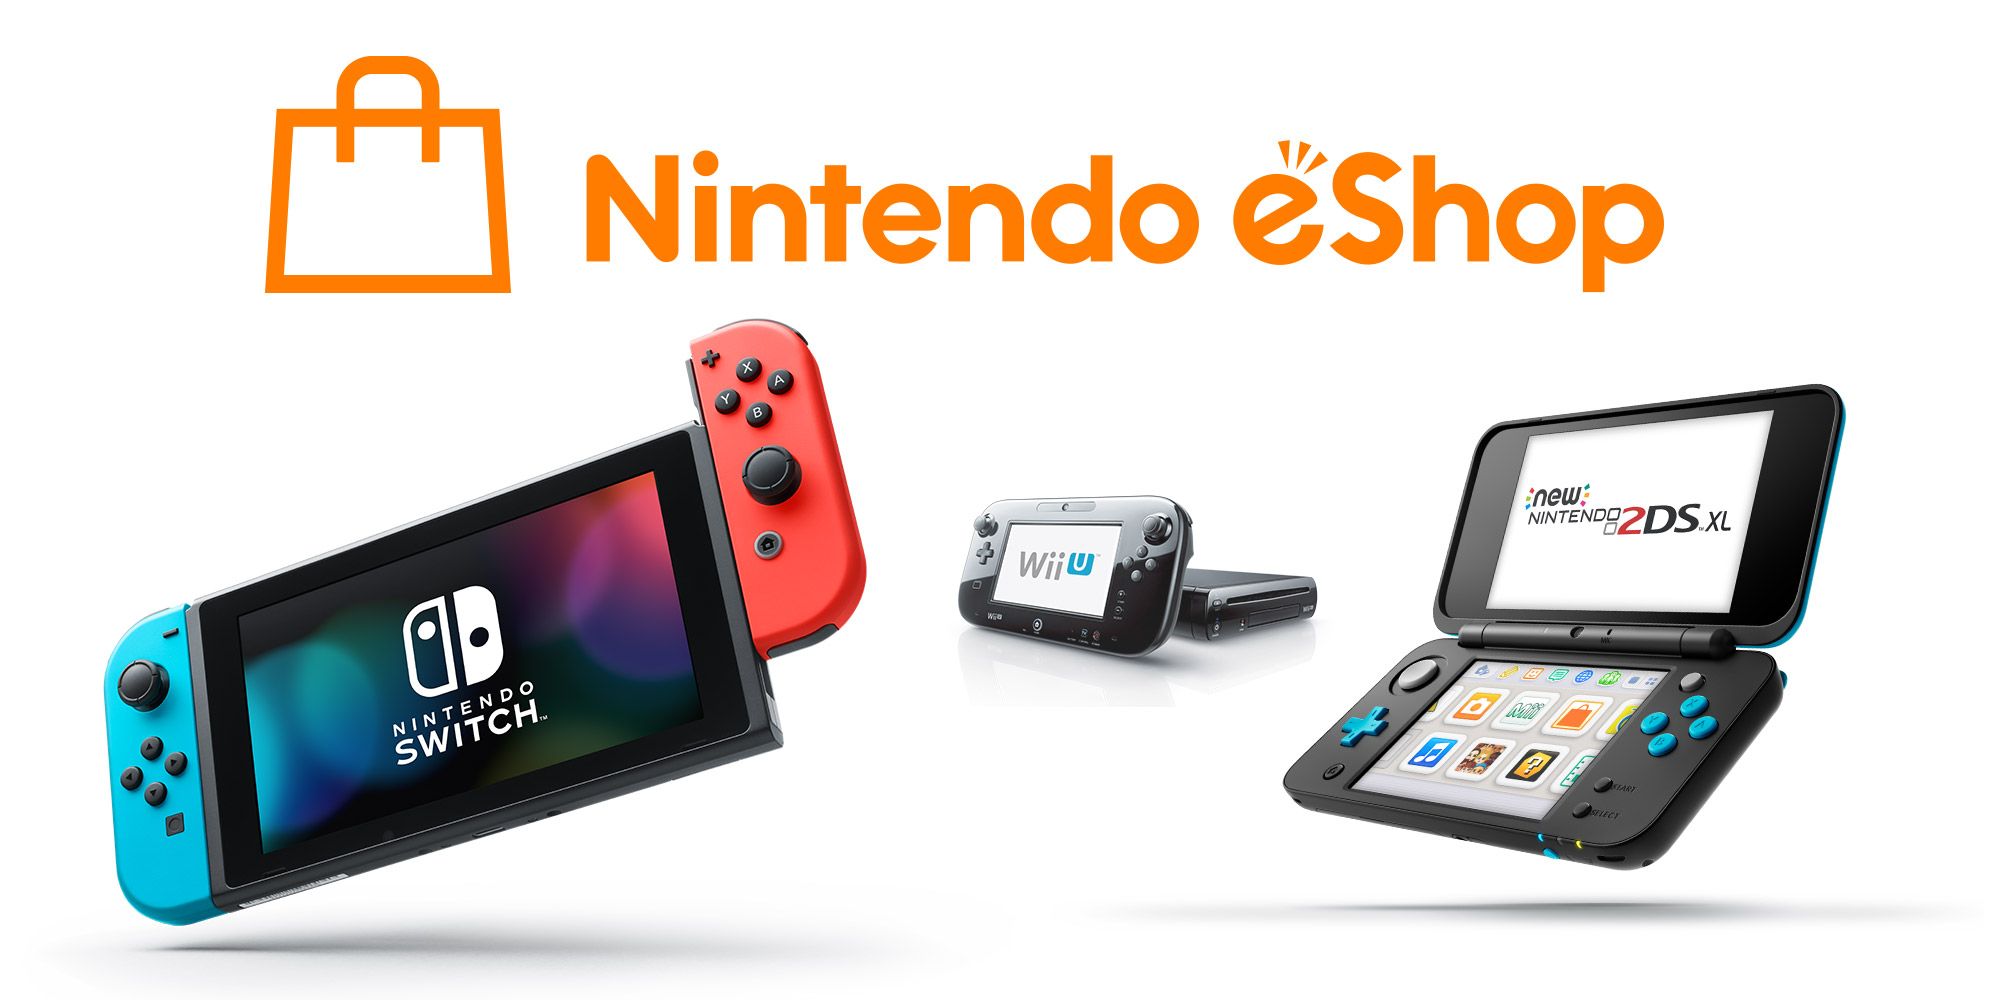 Nintendo eShop Promotial Image